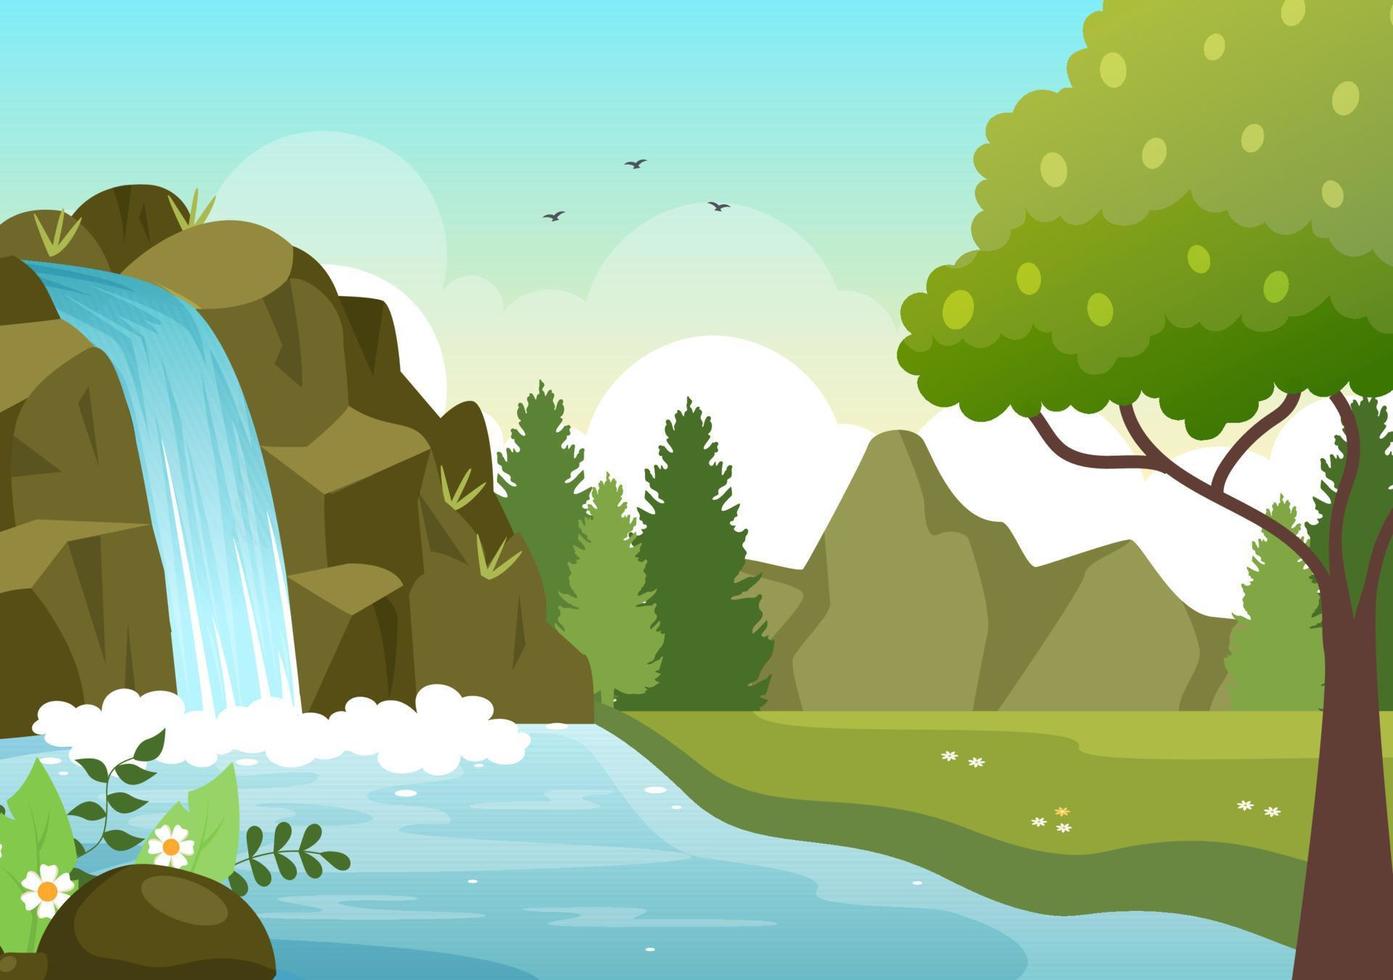 cascada paisaje de la selva de paisaje natural tropical con cascada de rocas, arroyos de río o acantilado rocoso en ilustración de vector de fondo plano